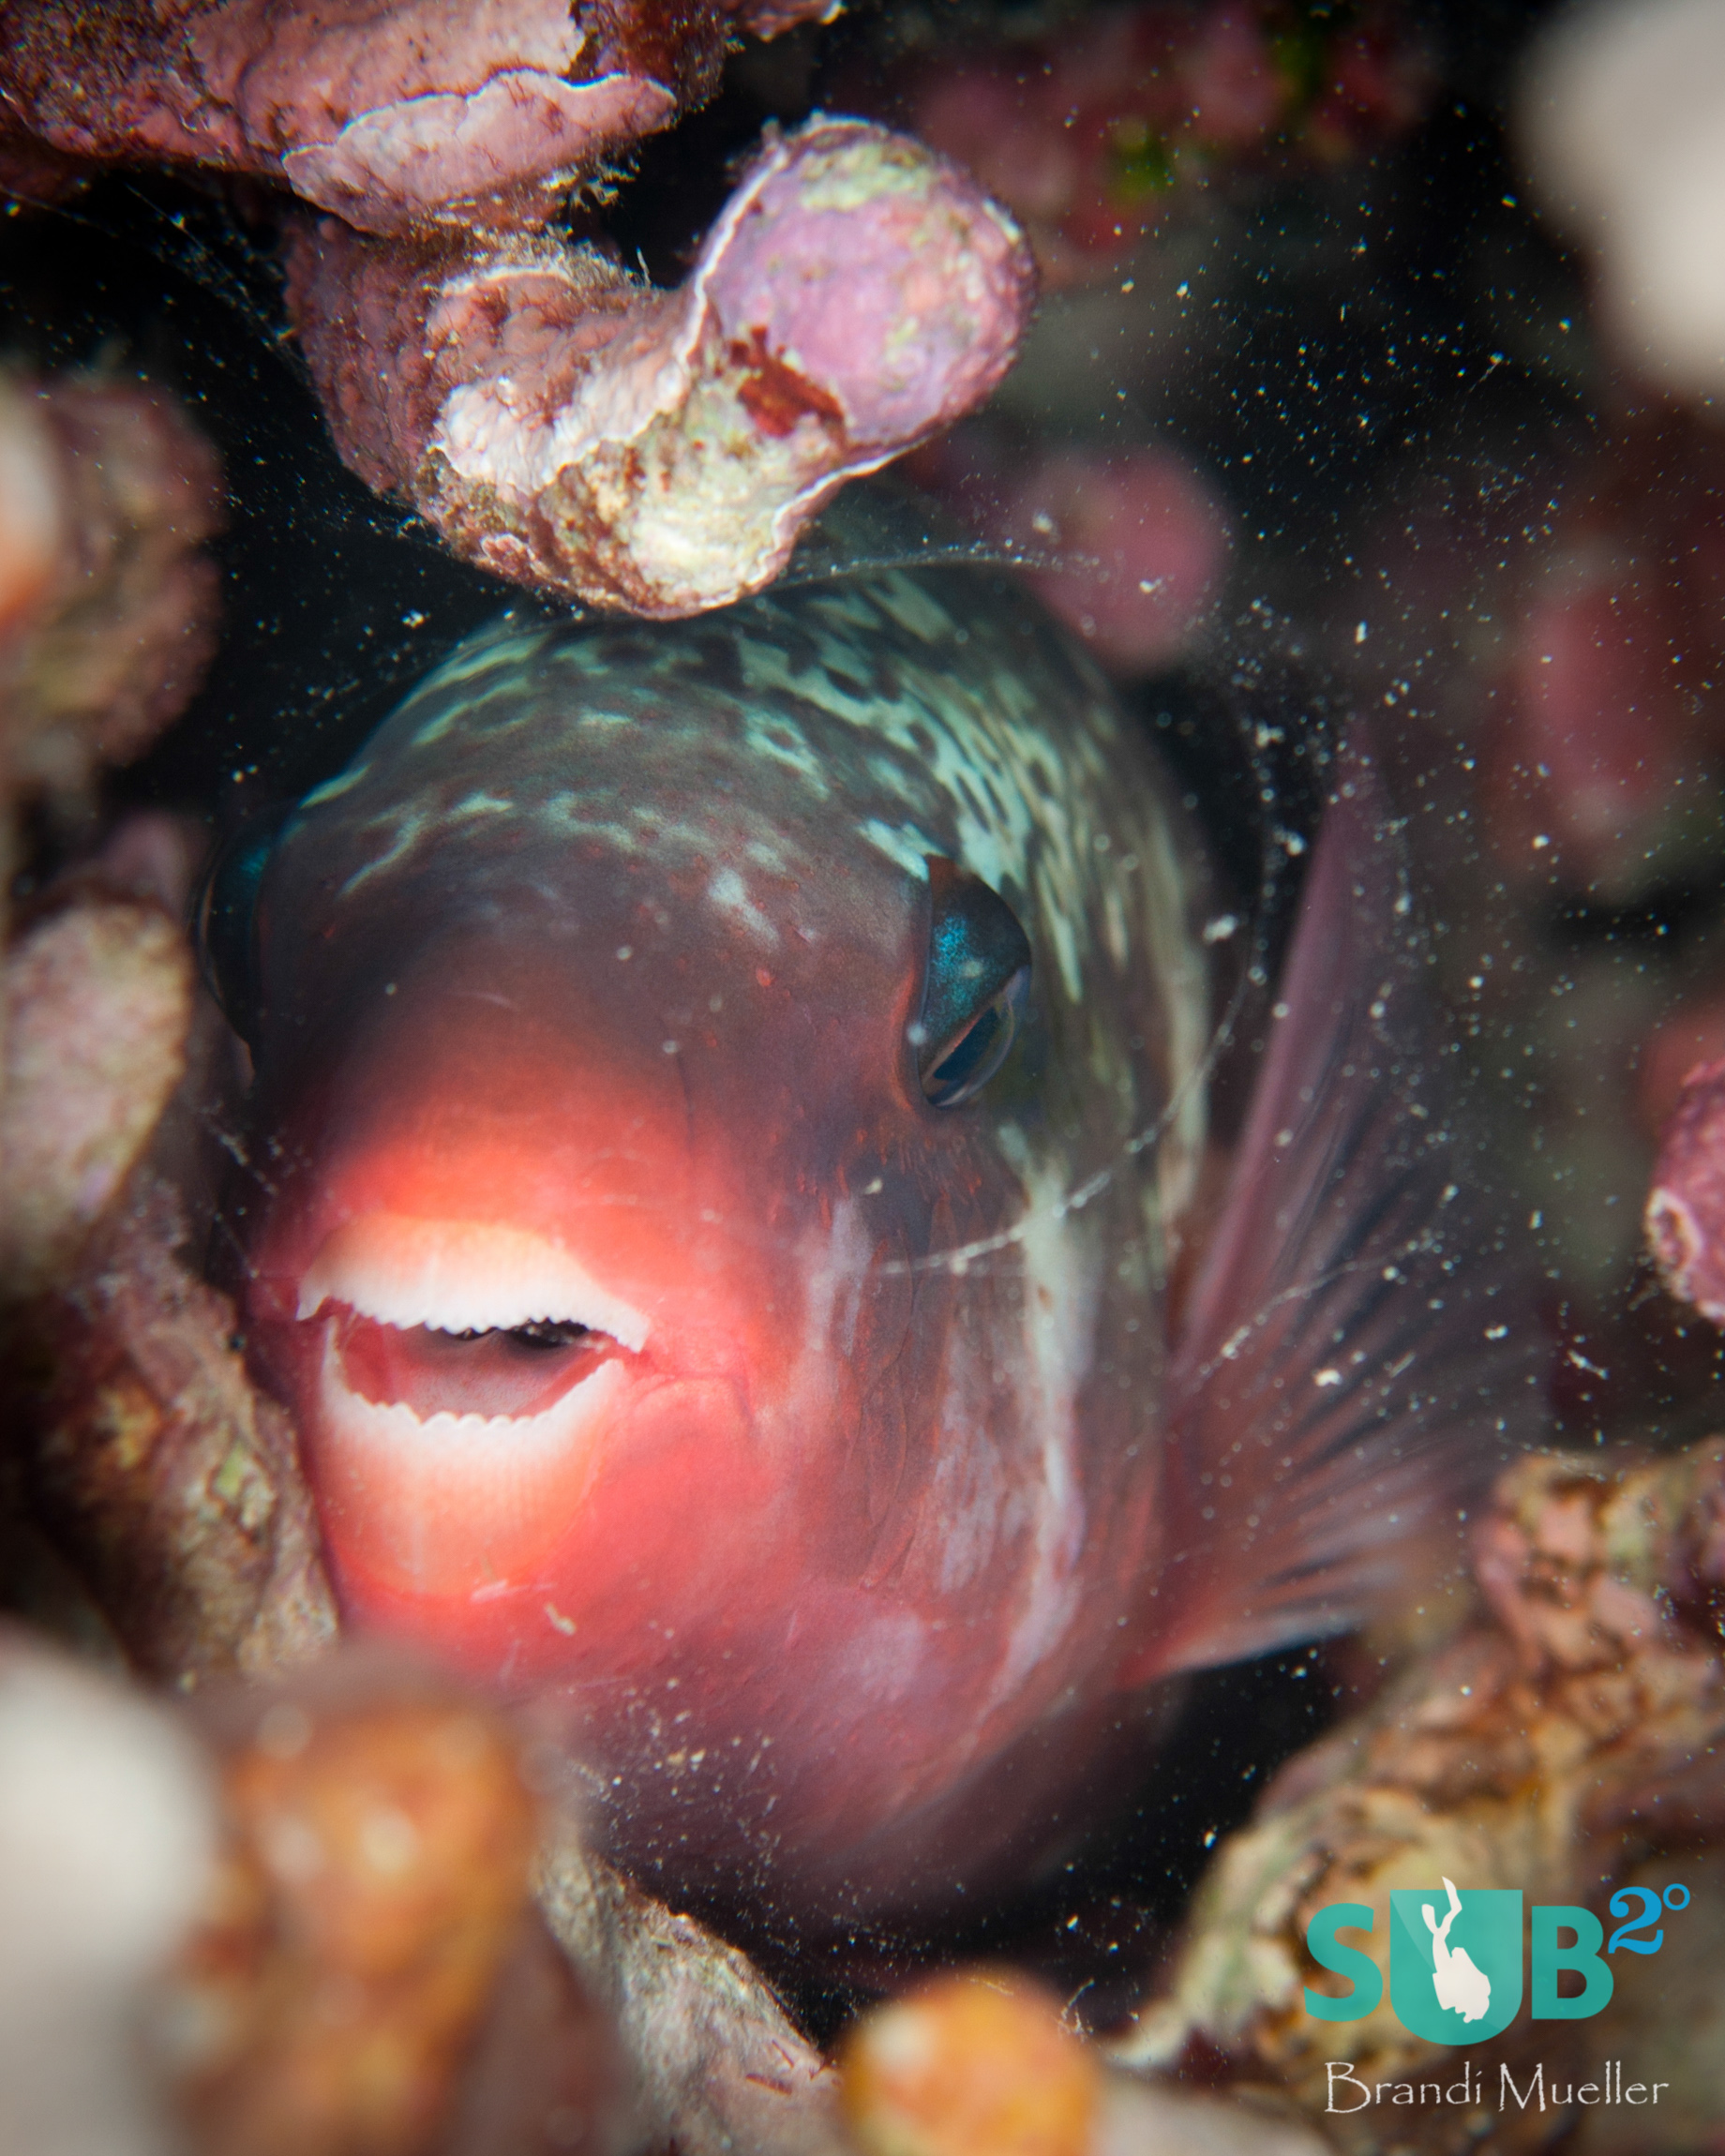 Sleeping Parrotfish